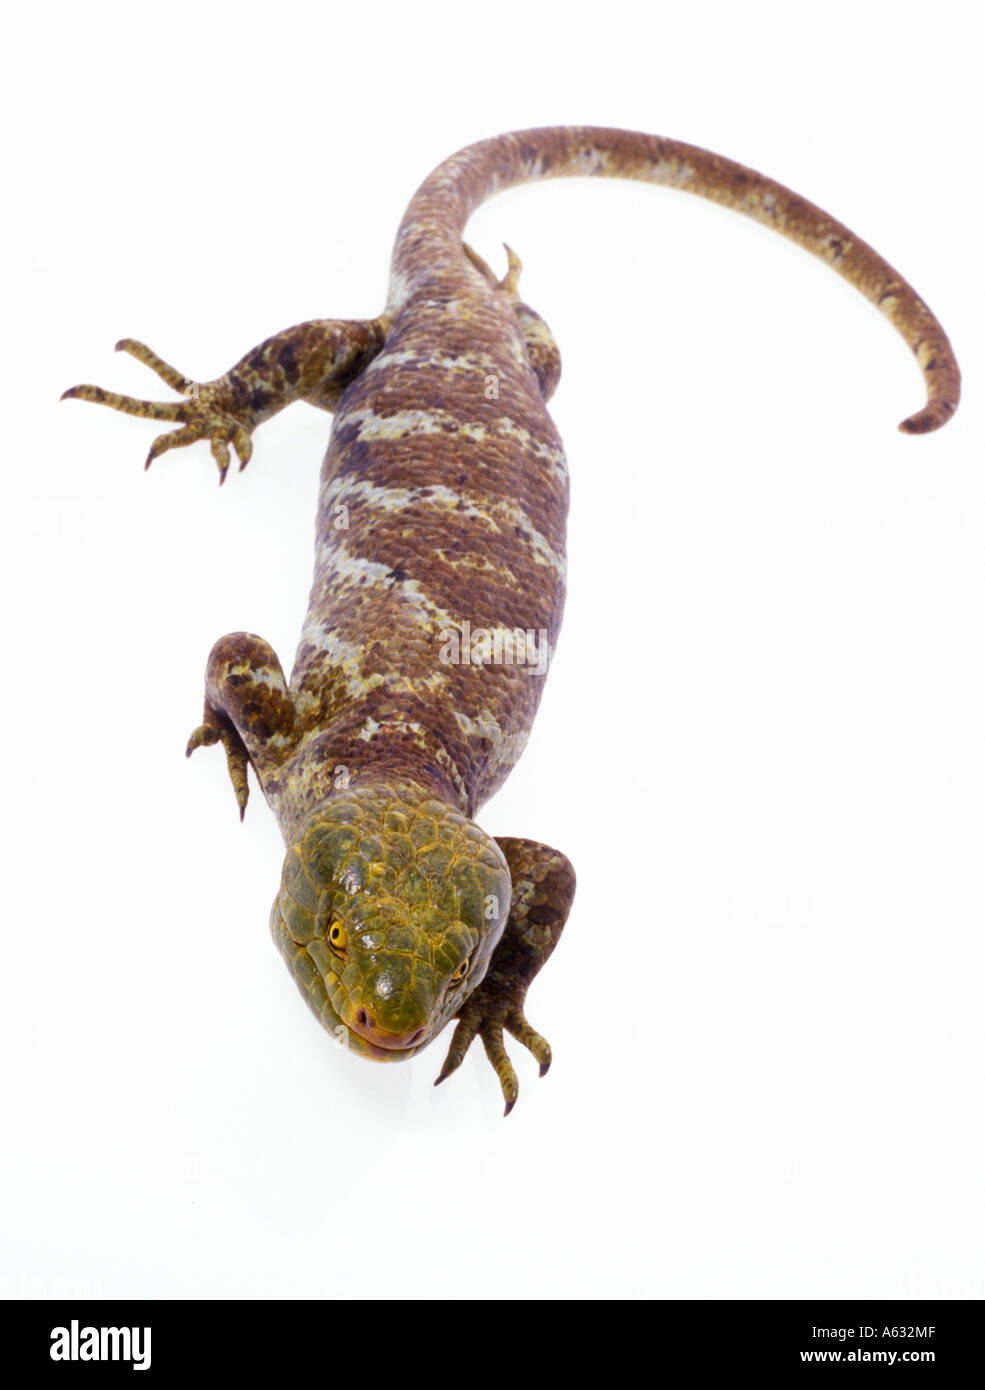 Close-up of lizard on white background, New Guinea, Australia Stock Photo